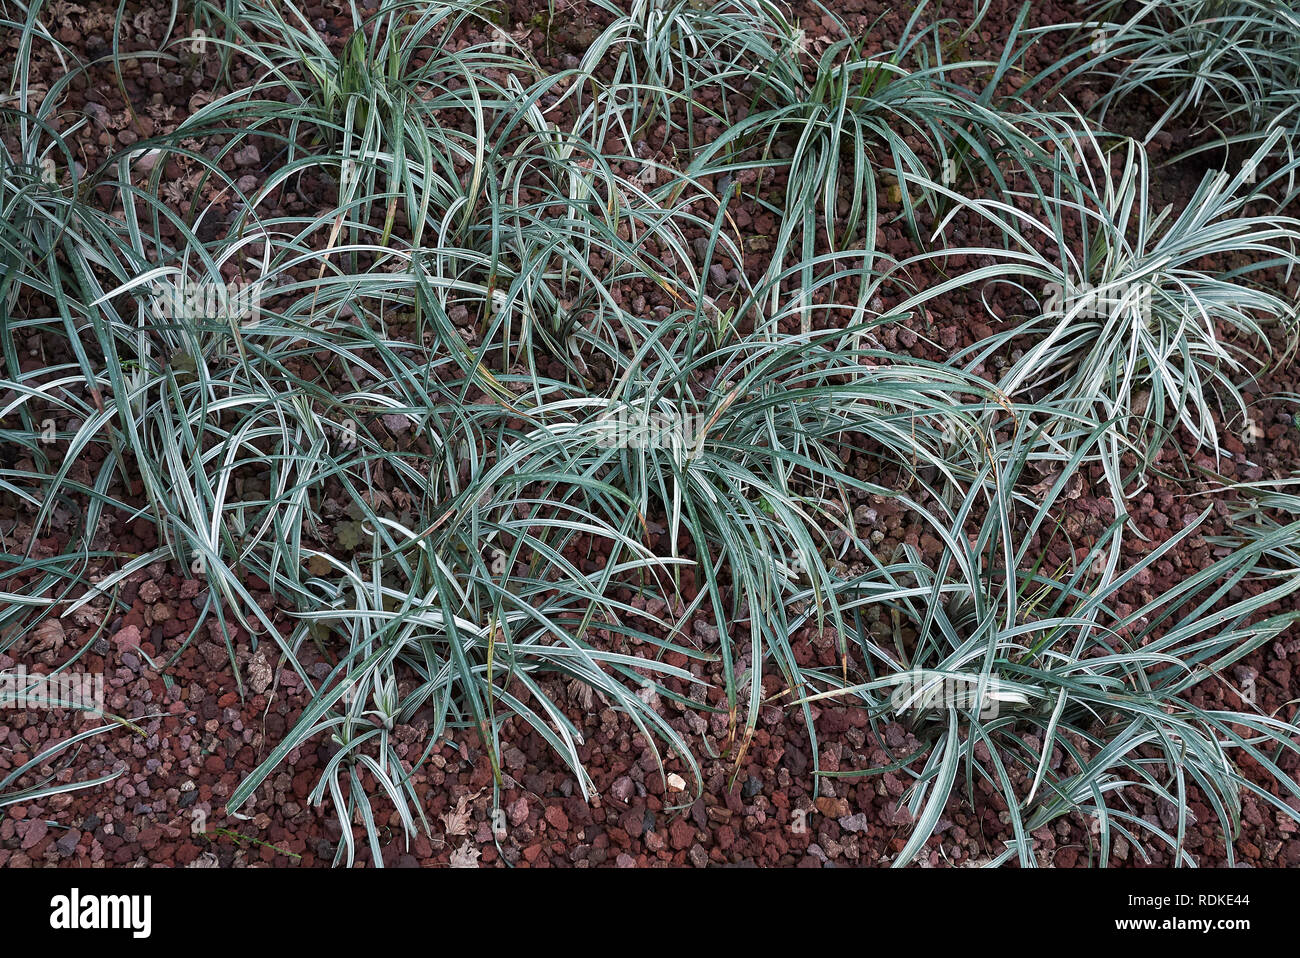 Carex everest in a garden Stock Photo